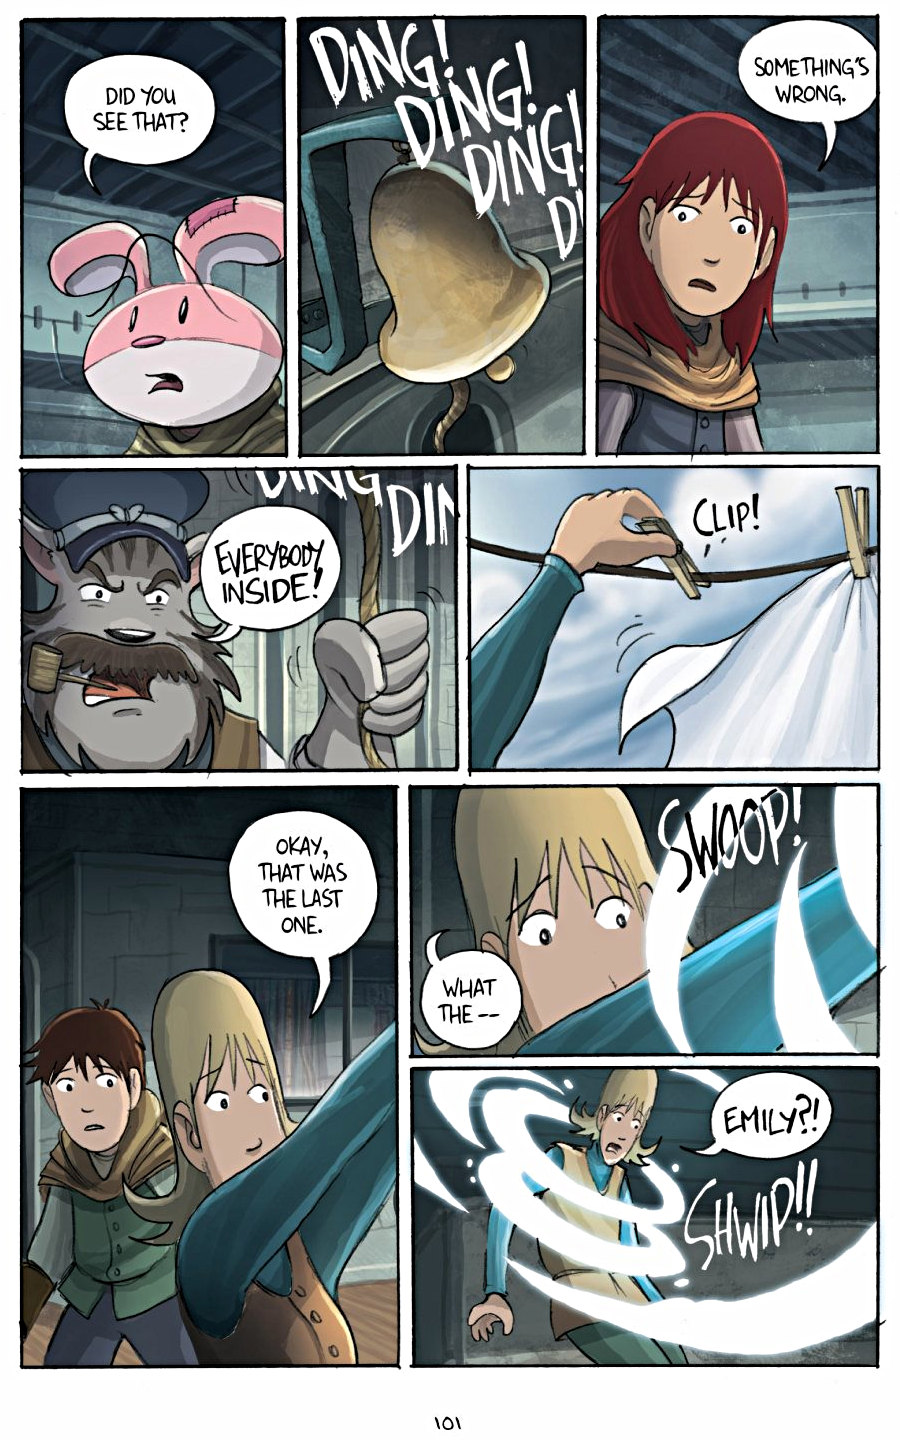 page 101 of amulet 3 cloud searchers graphic novel by kazu kibuishi